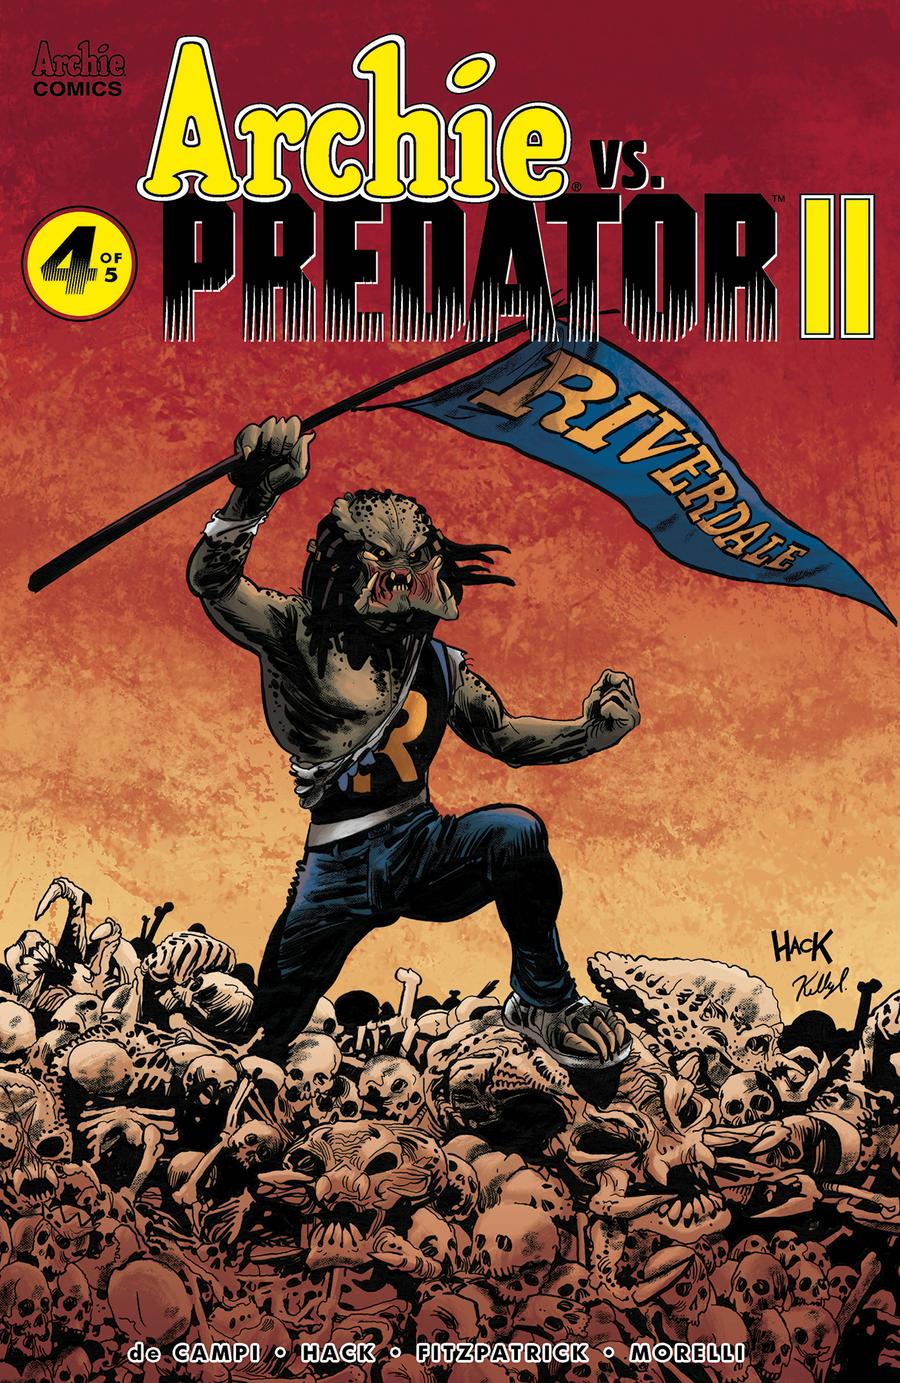 Archie vs Predator II #4 Cover A Regular Robert Hack & Kelly Fitzpatrick Cover